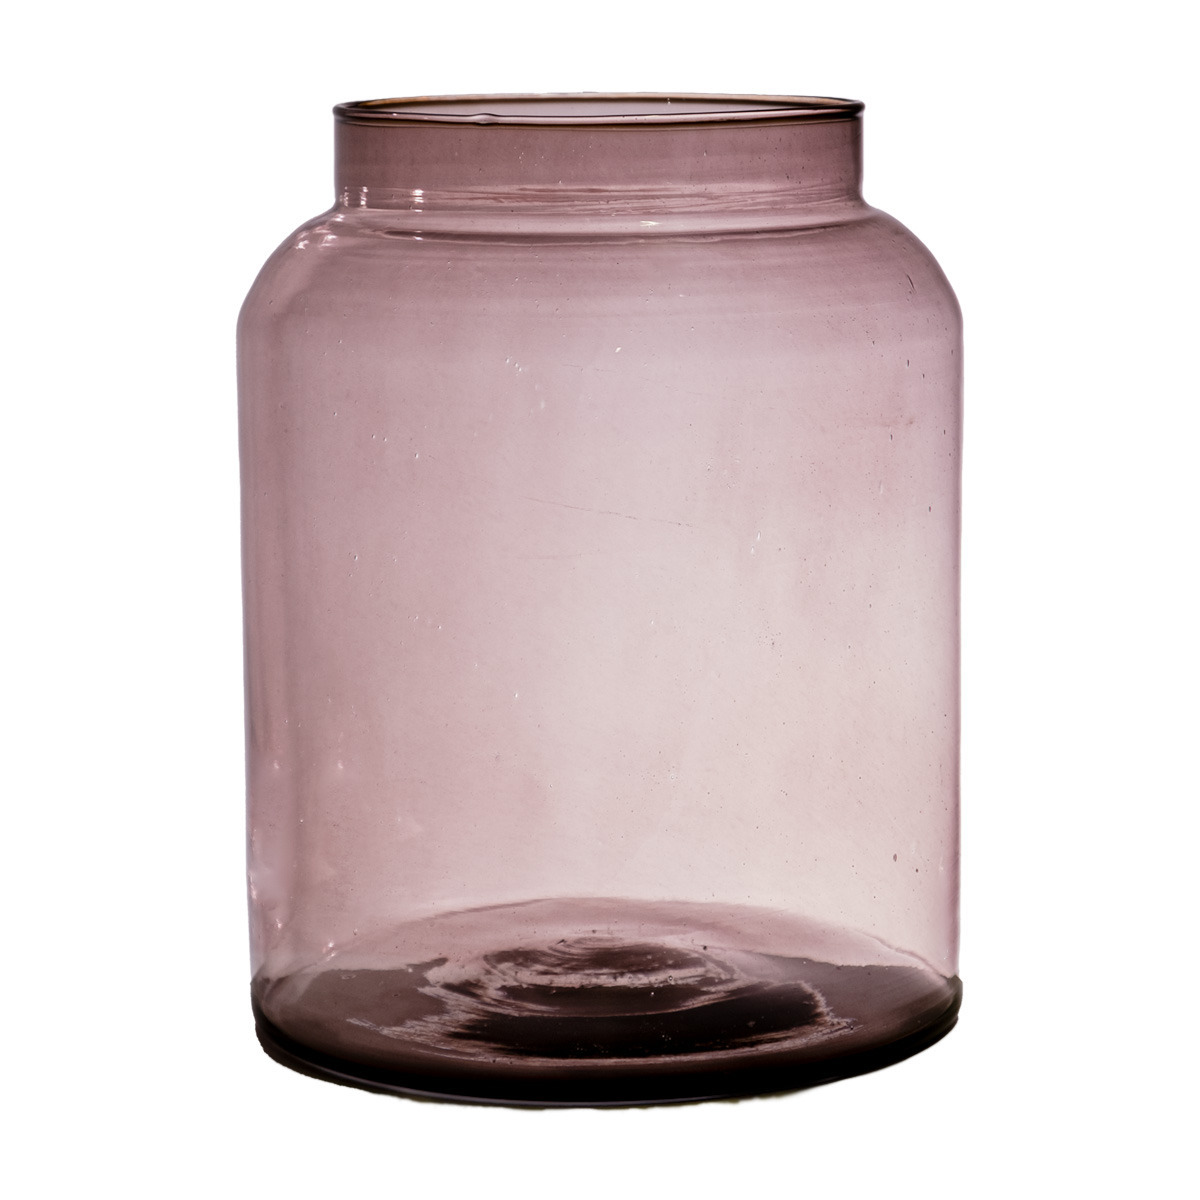 Hakbijl Glass Bloemenvaas Shape transparant mauve eco glas D19 x H25 cm Melkbus vaas